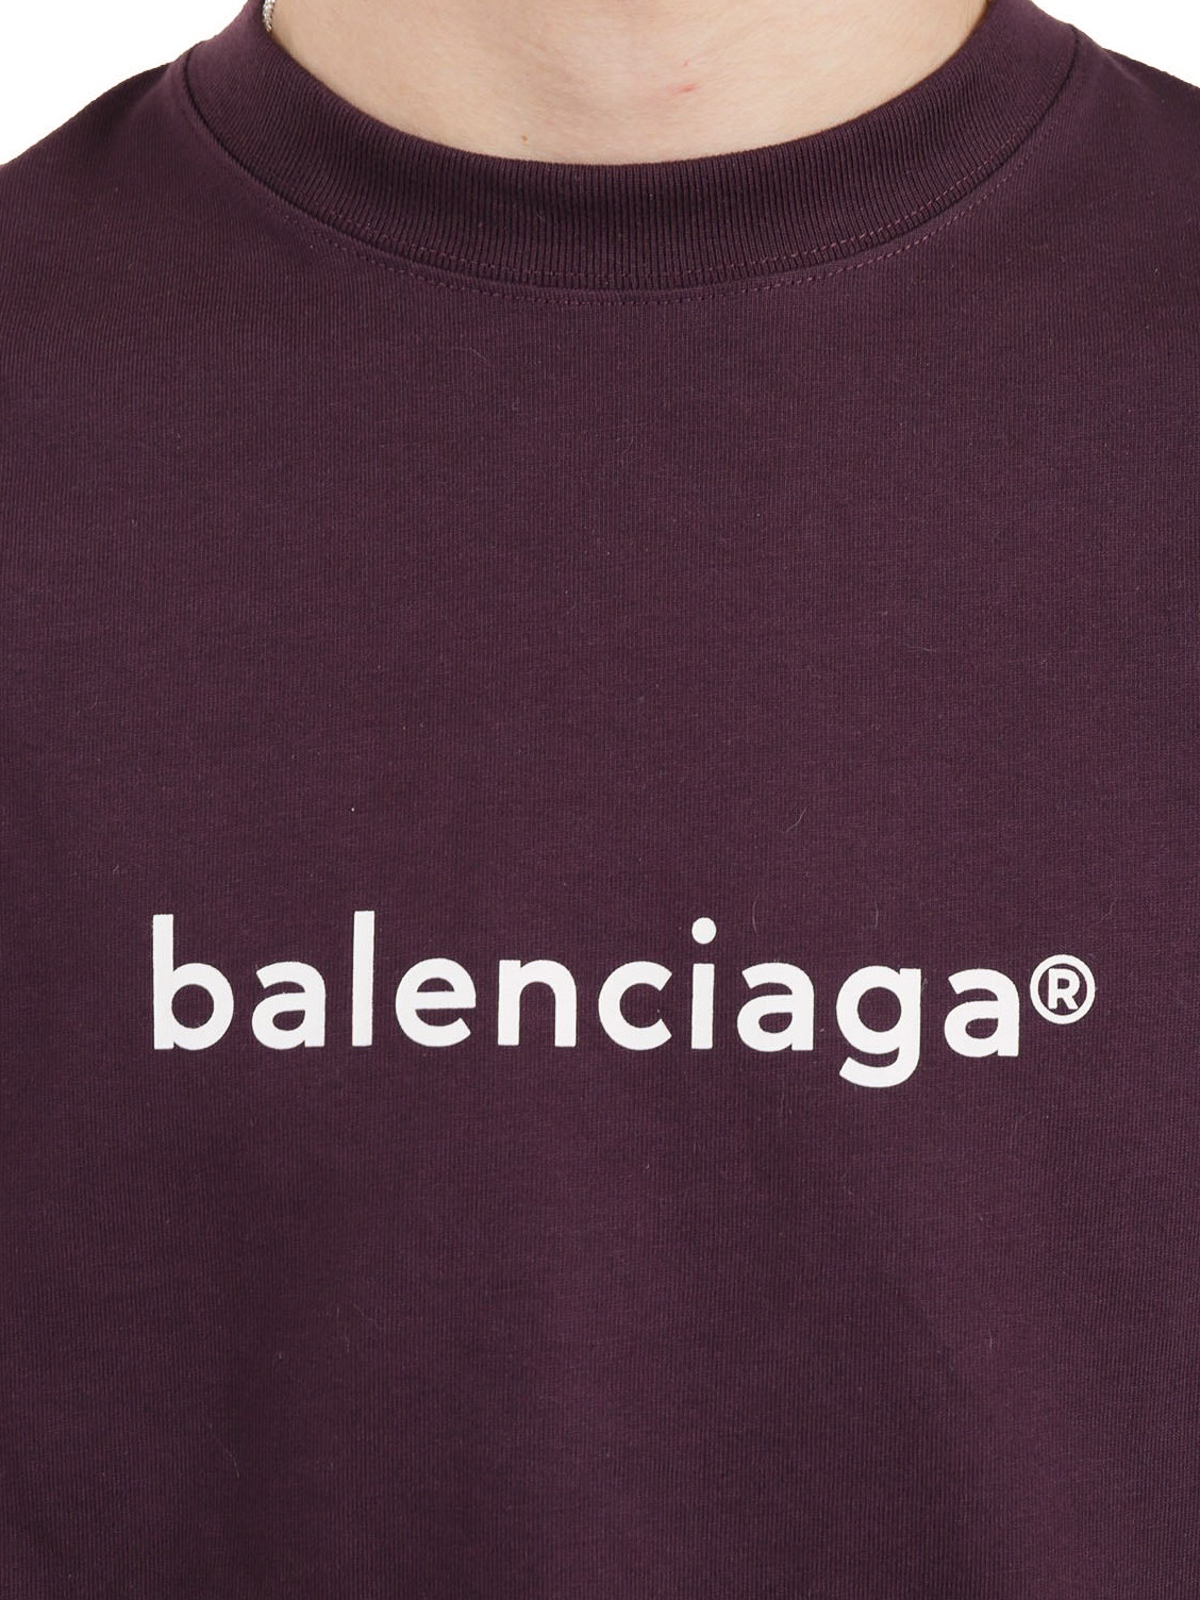 T-shirts Balenciaga - New Copyright T-shirt - 612966TIV545182 